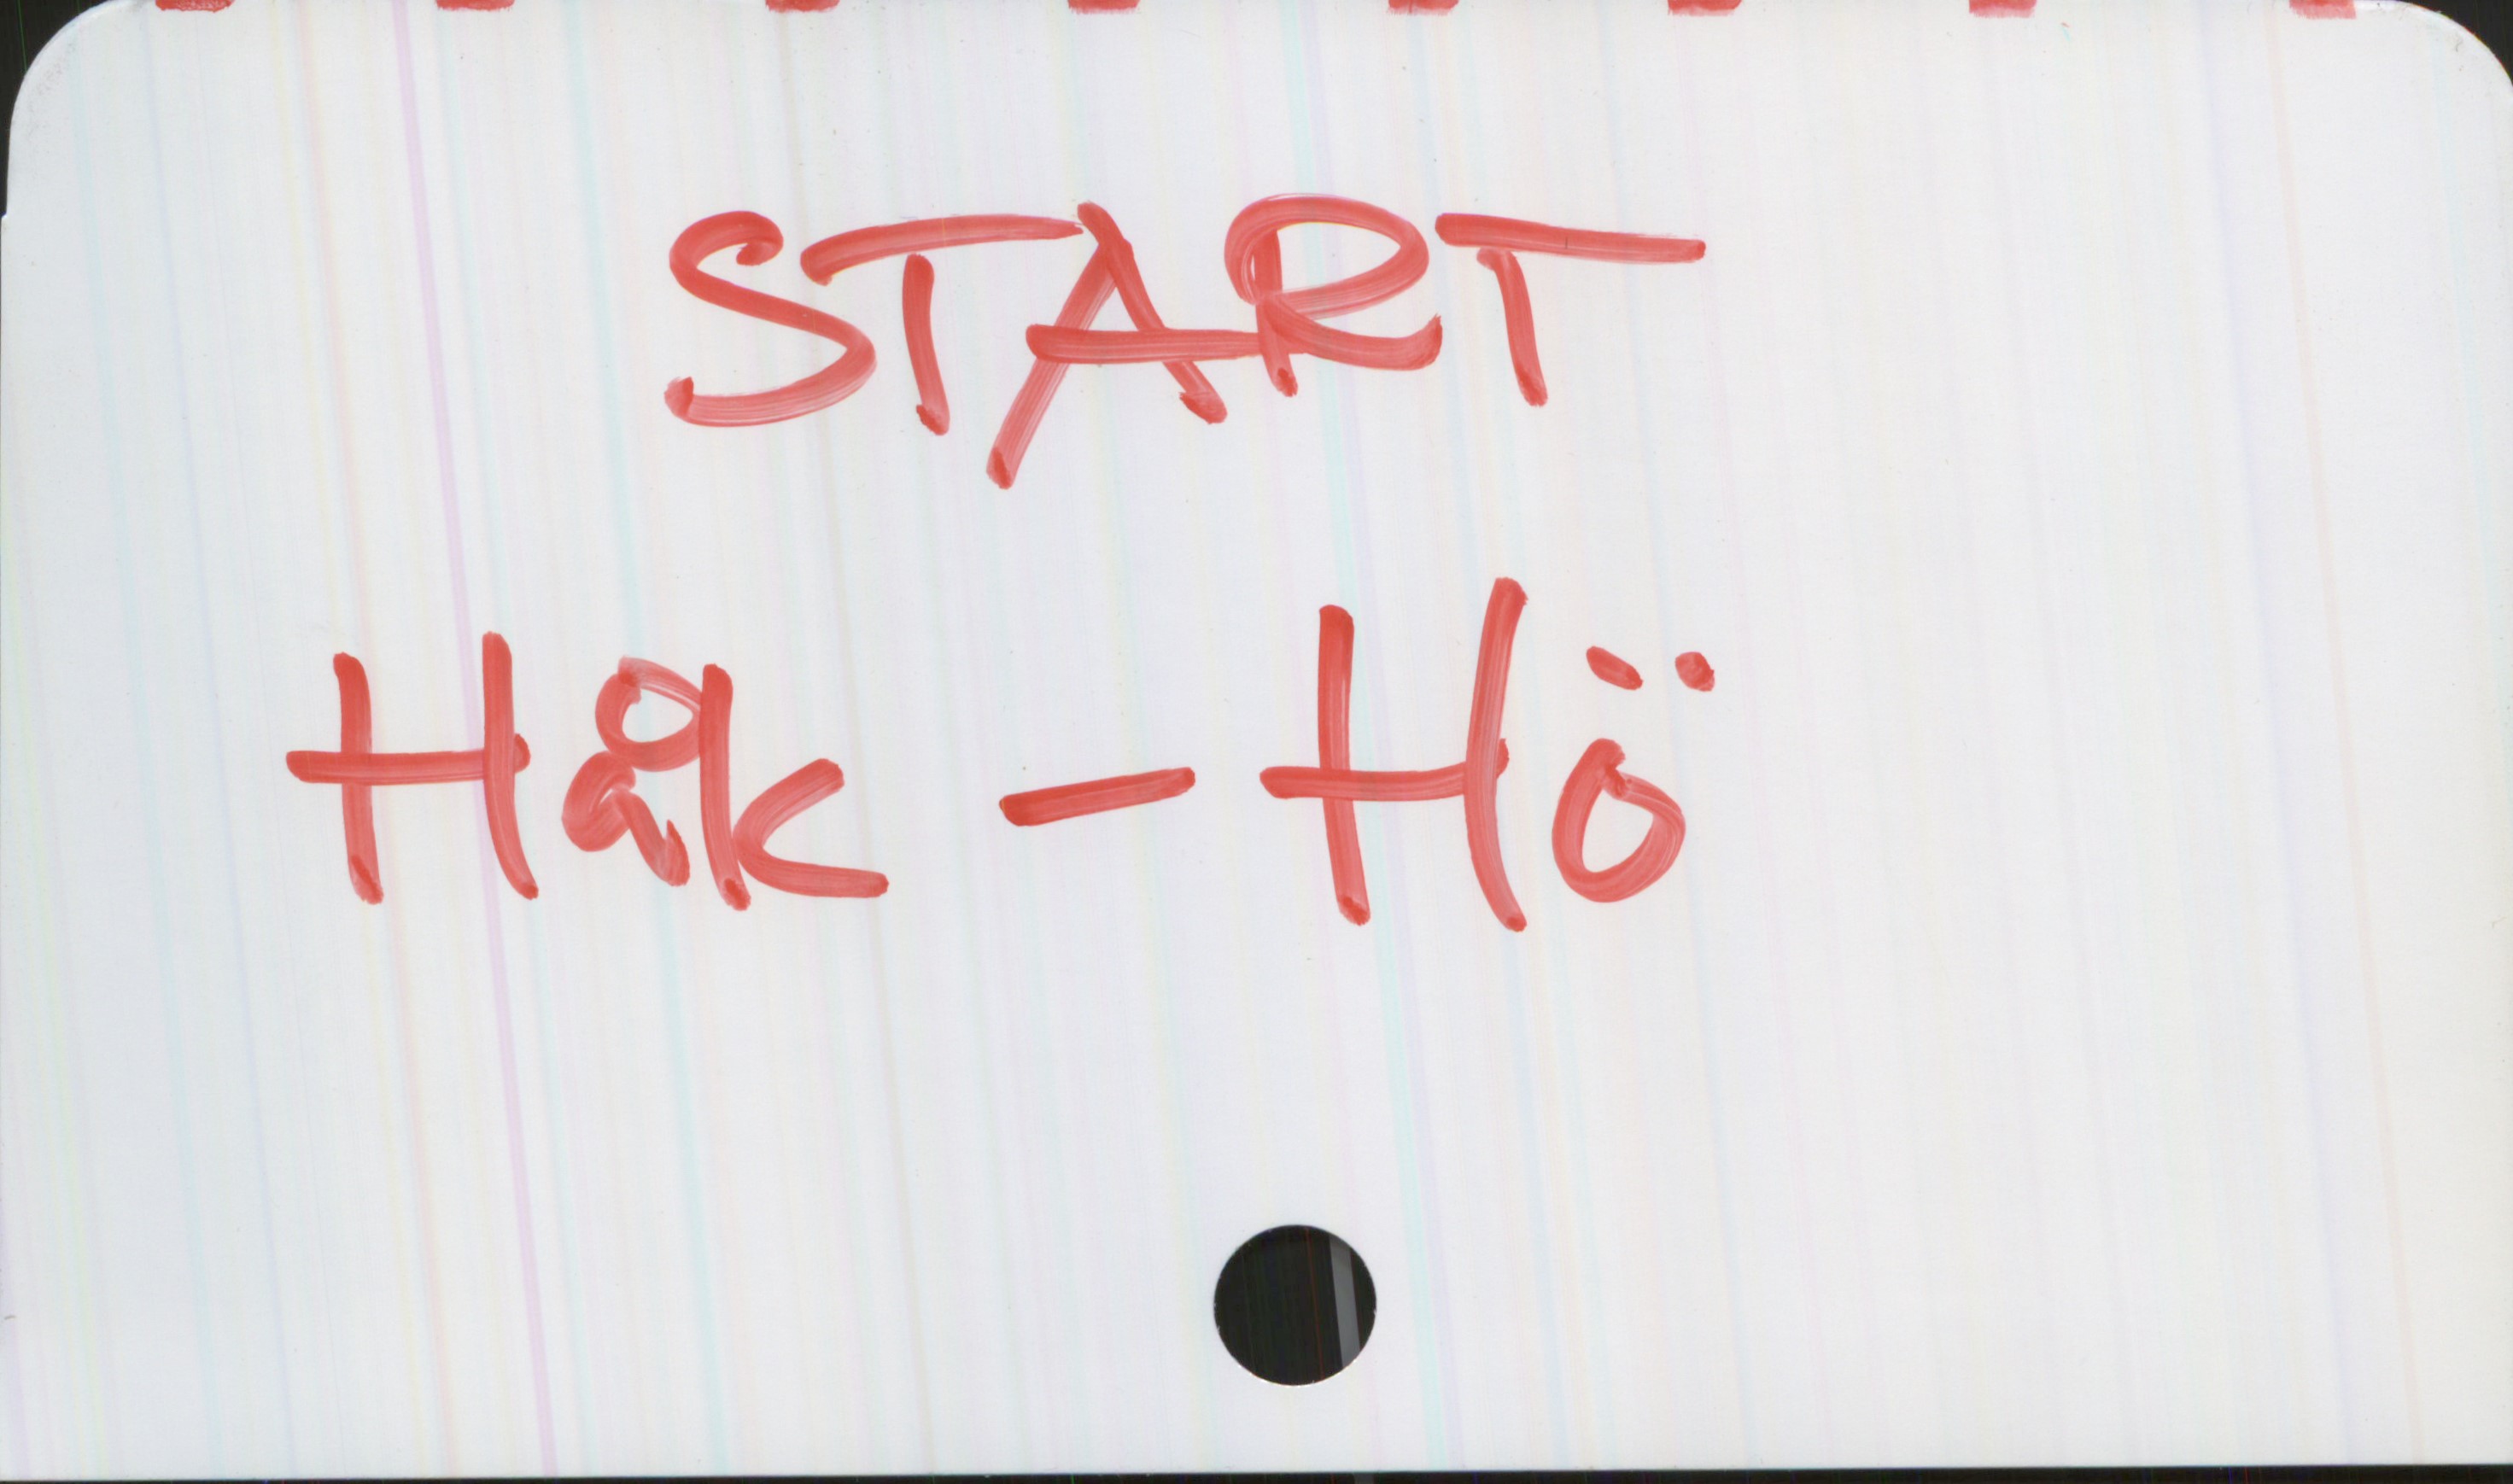 START START
Håk-Hö